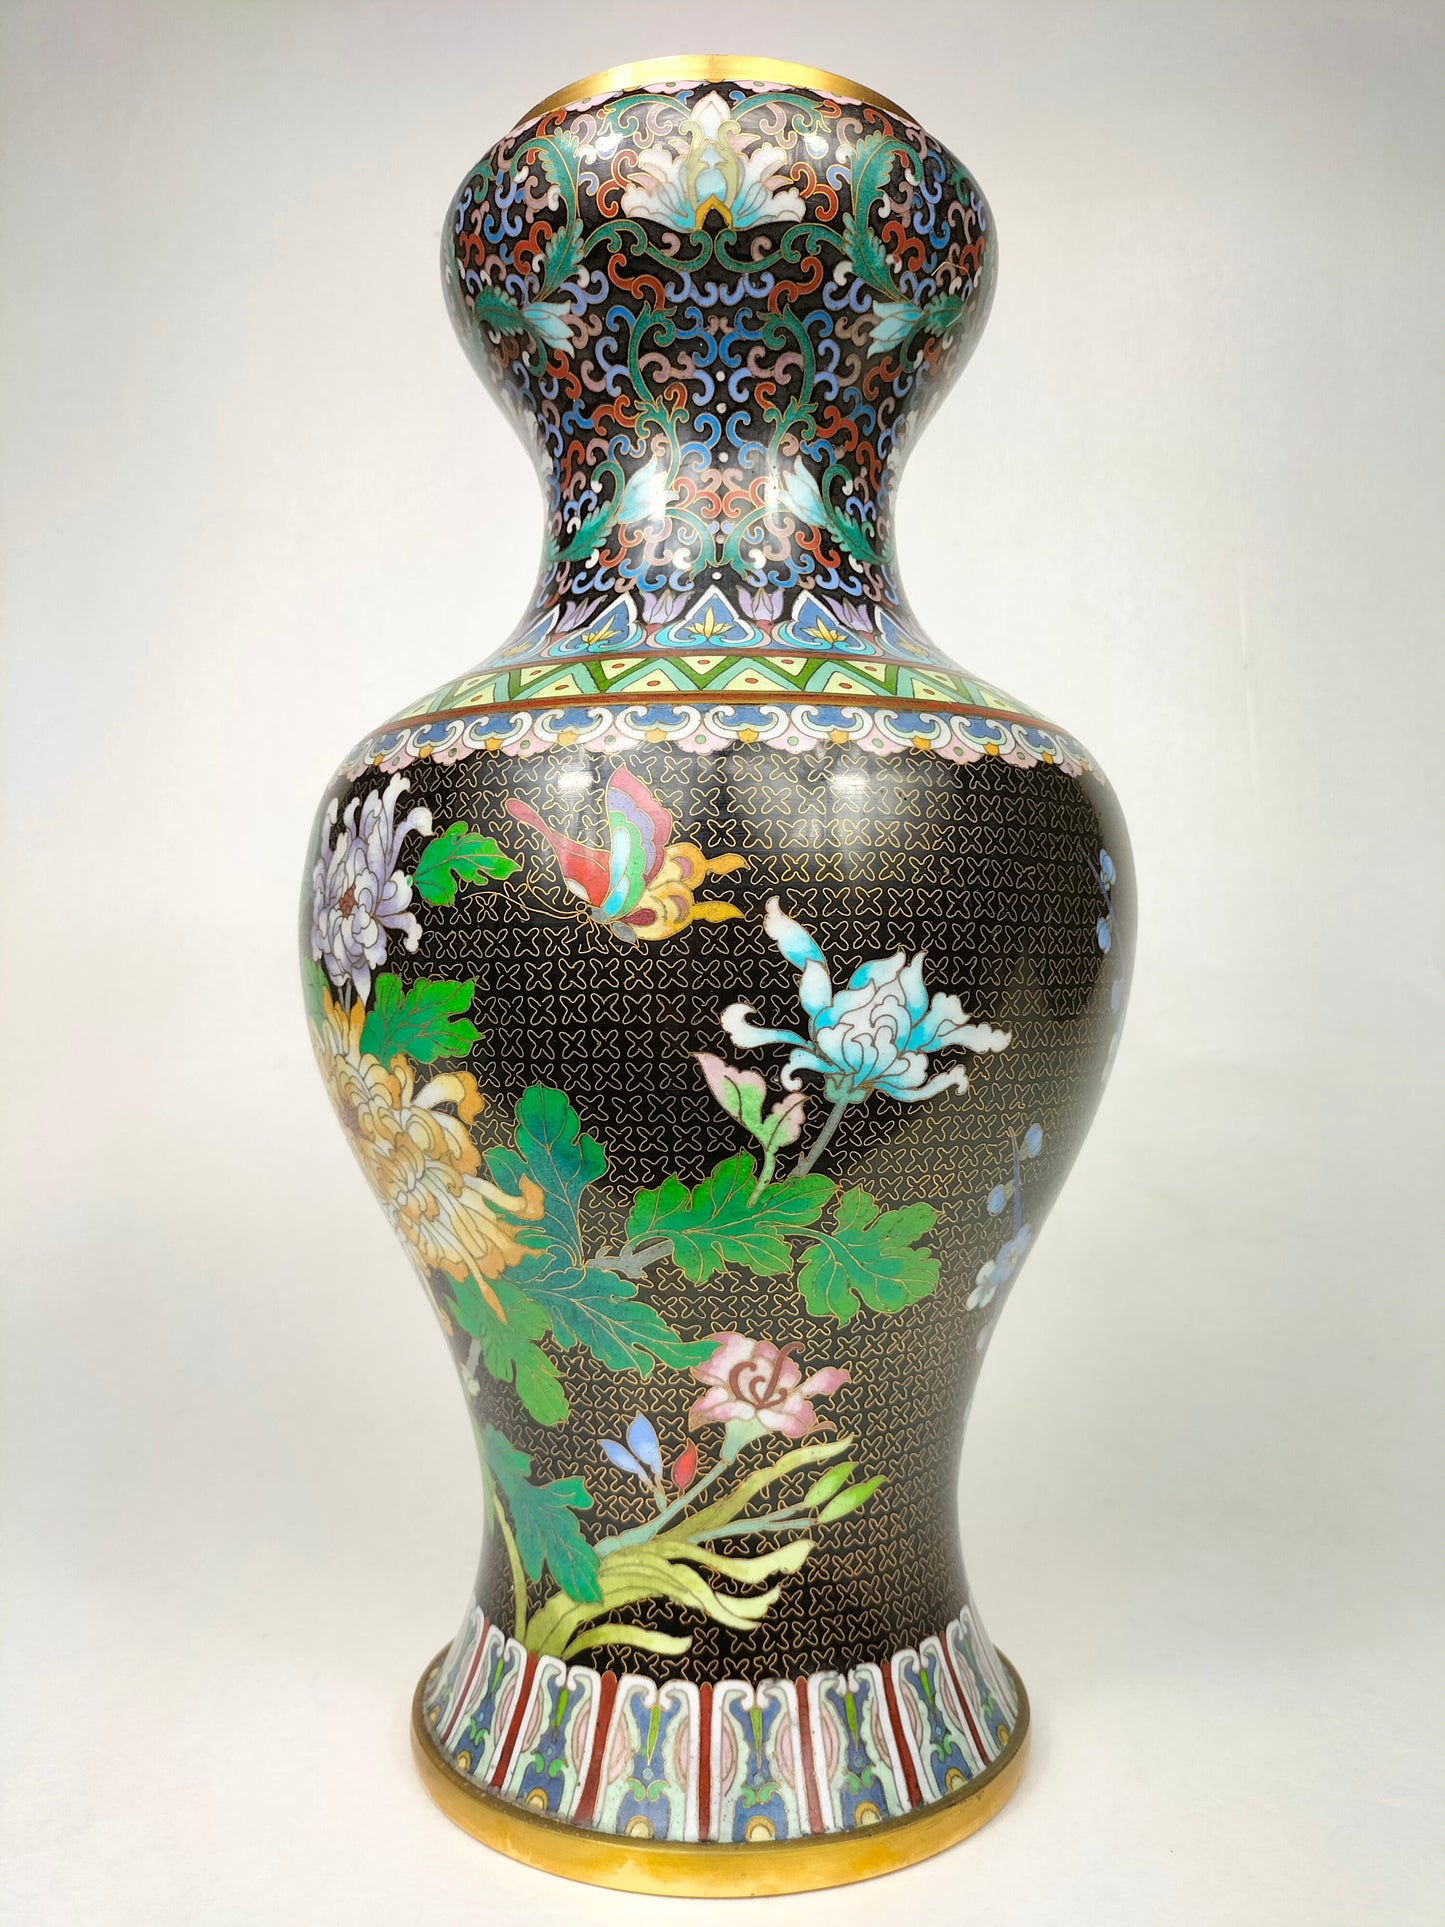 Pasu cloisonne Cina vintaj dihiasi dengan bunga dan rama-rama // Pertengahan abad ke-20